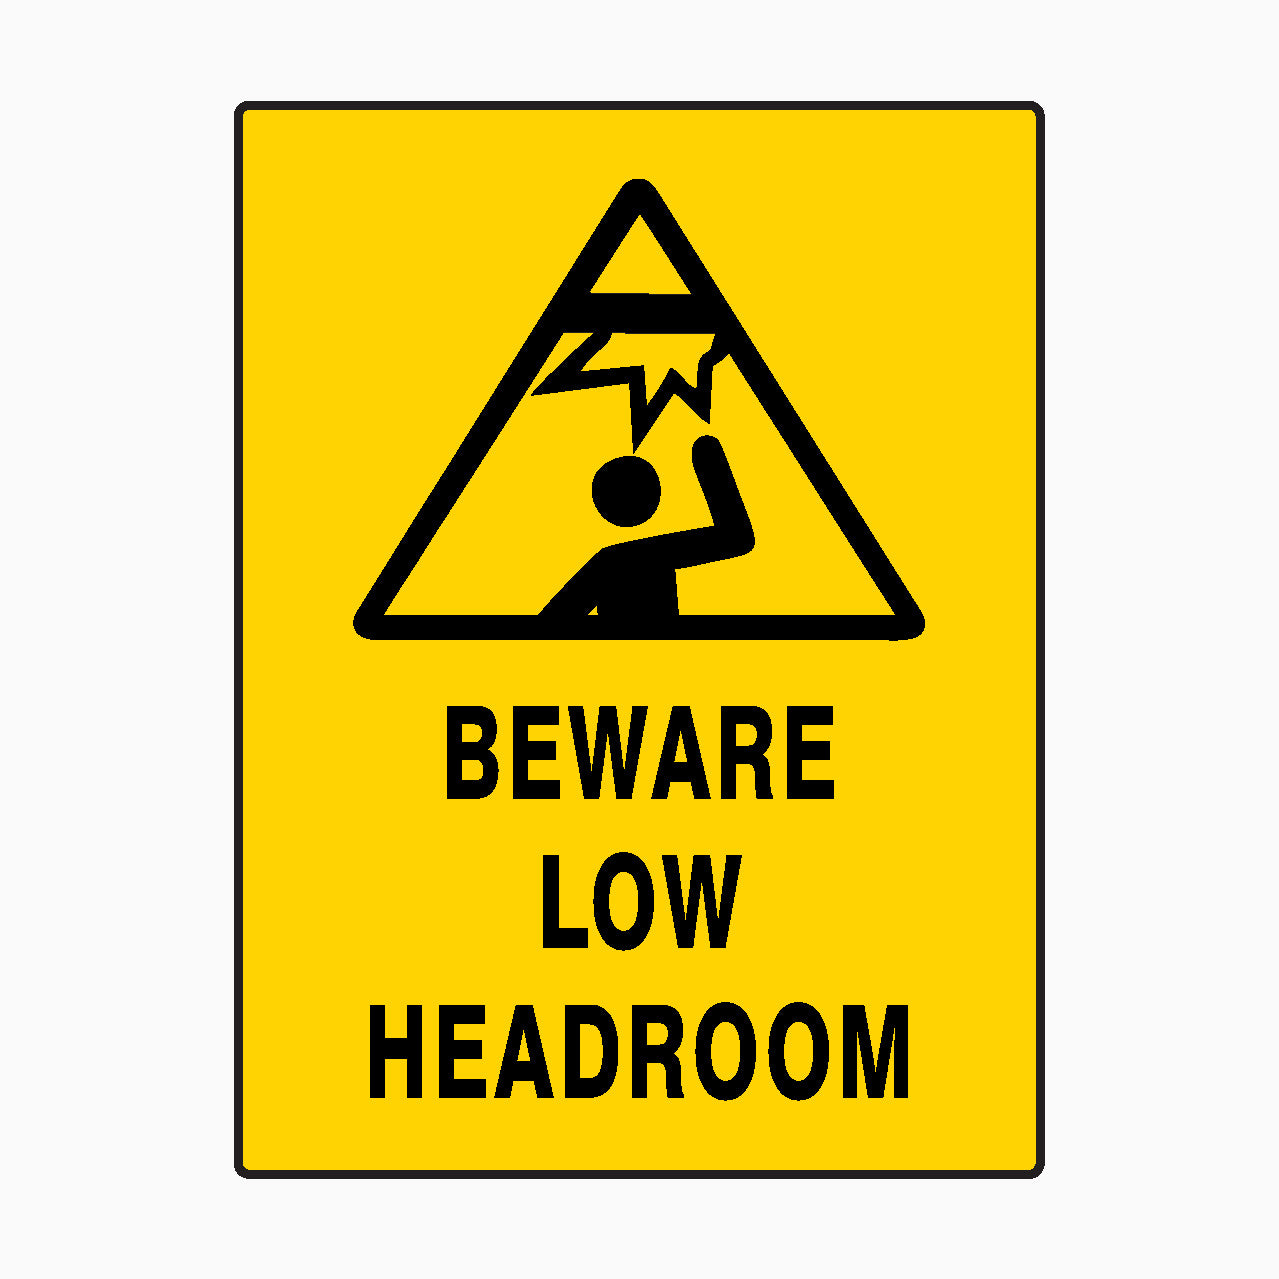 BEWARE LOW HEADROOM SIGN